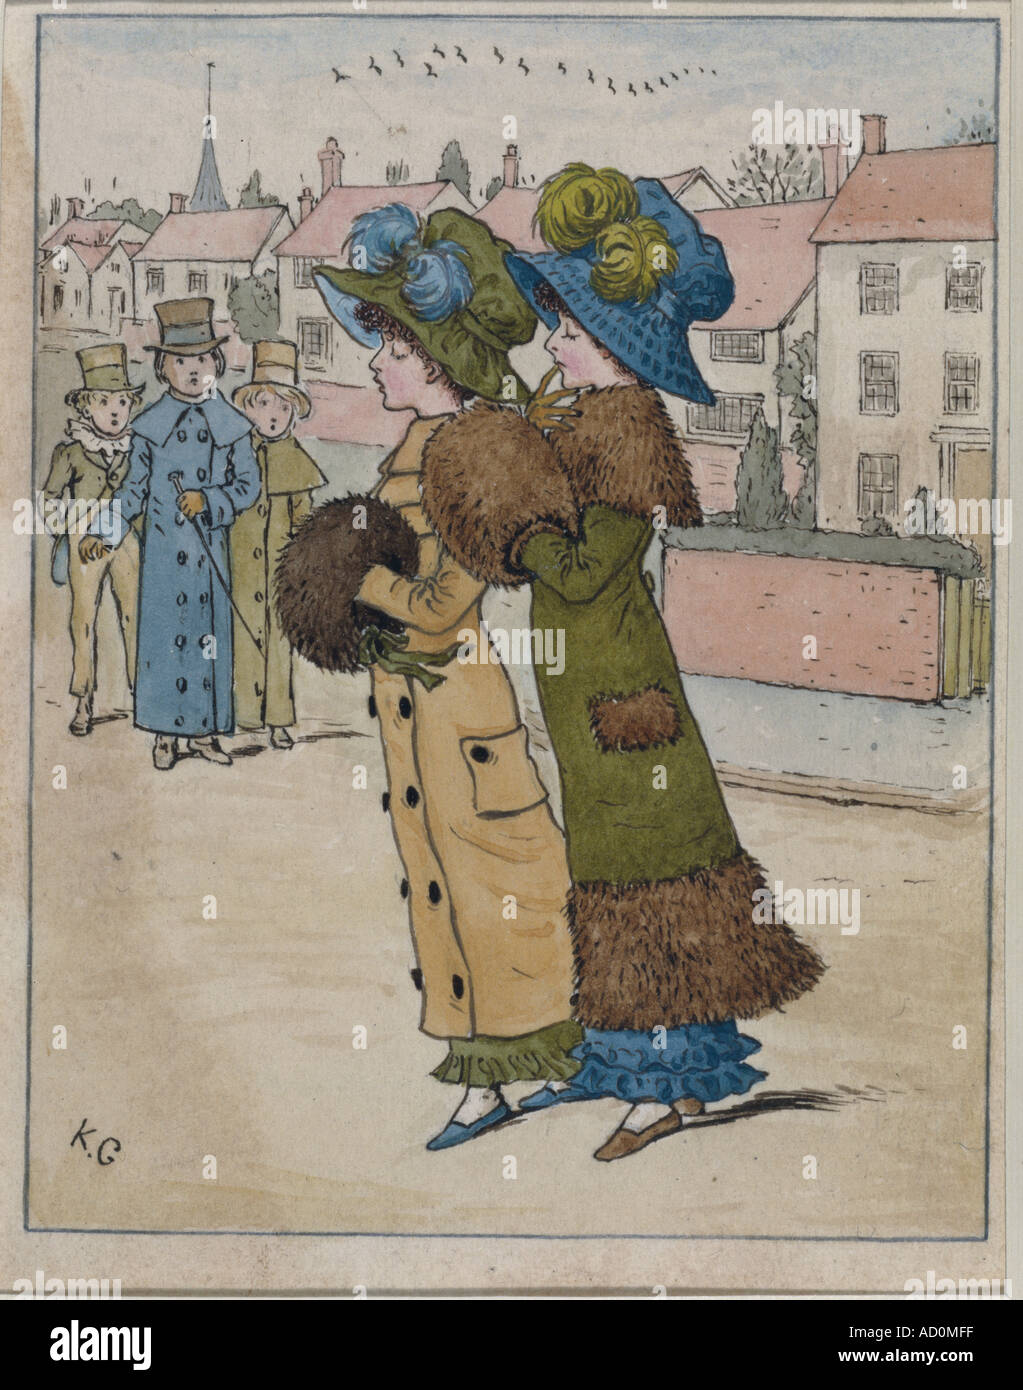 Fashion parade by Kate Greenaway. England, late 19th century. Stock Photo